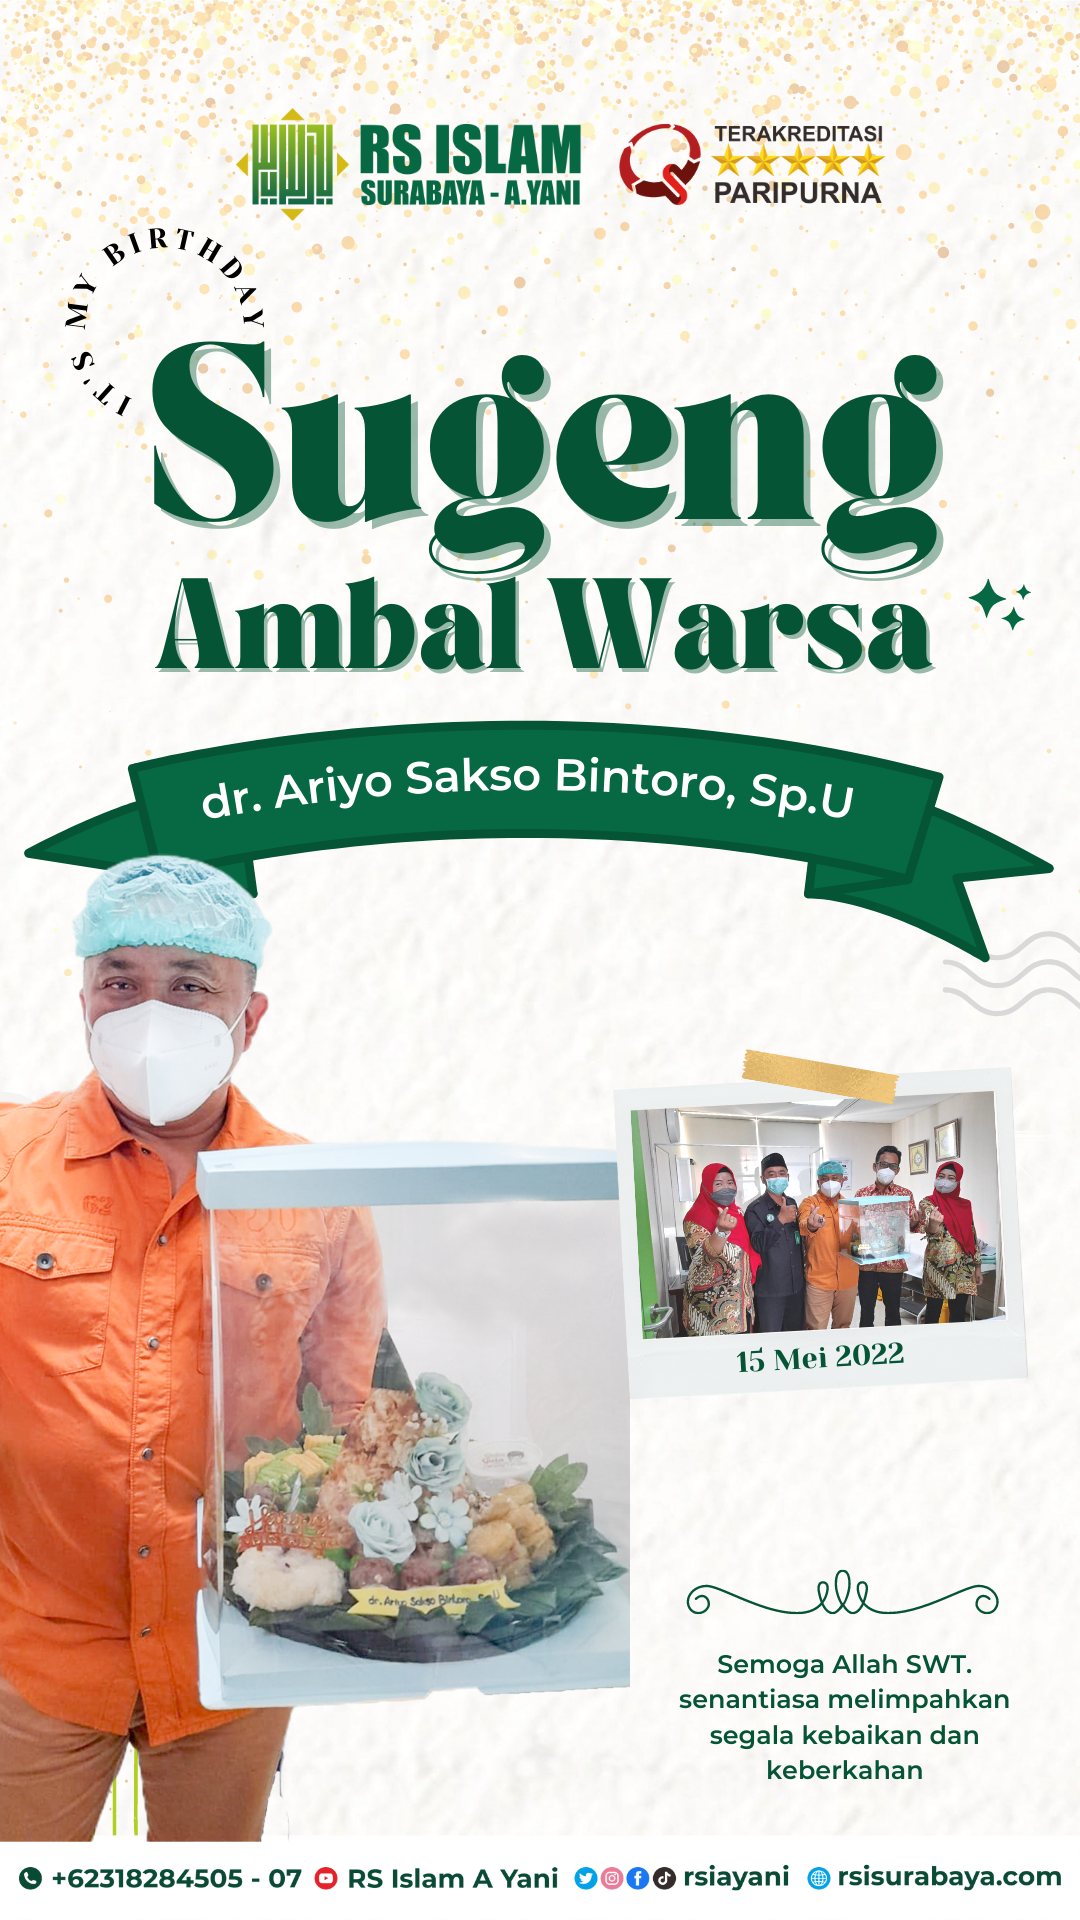 dr.-Ariyo-Sakso-Bintoro-Sp.U-15-mei-2022-ultah-rsi.png